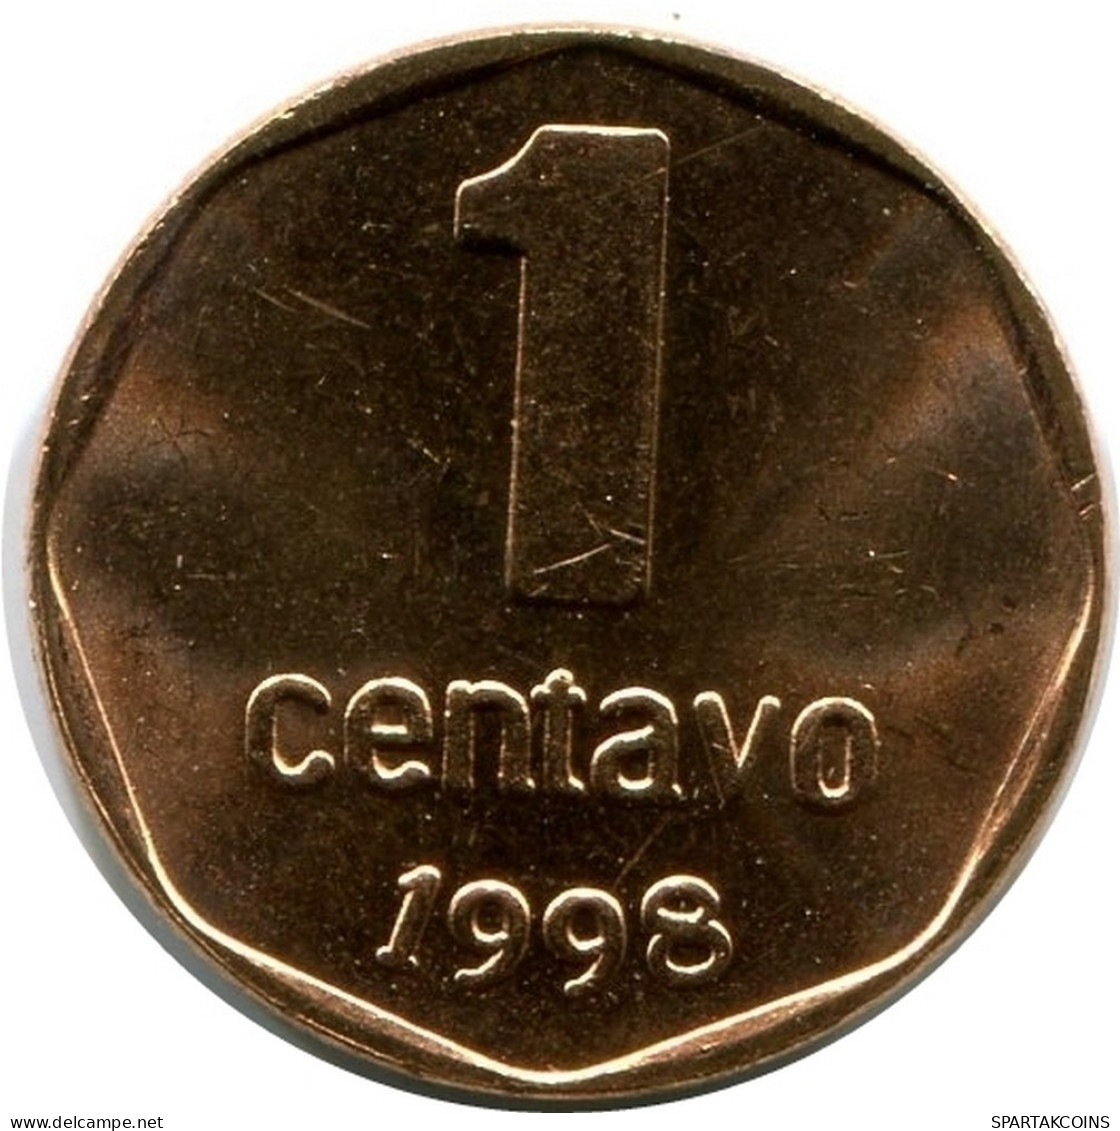 1 CENTAVO 1998 ARGENTINA Moneda UNC #M10117.E.A - Argentine